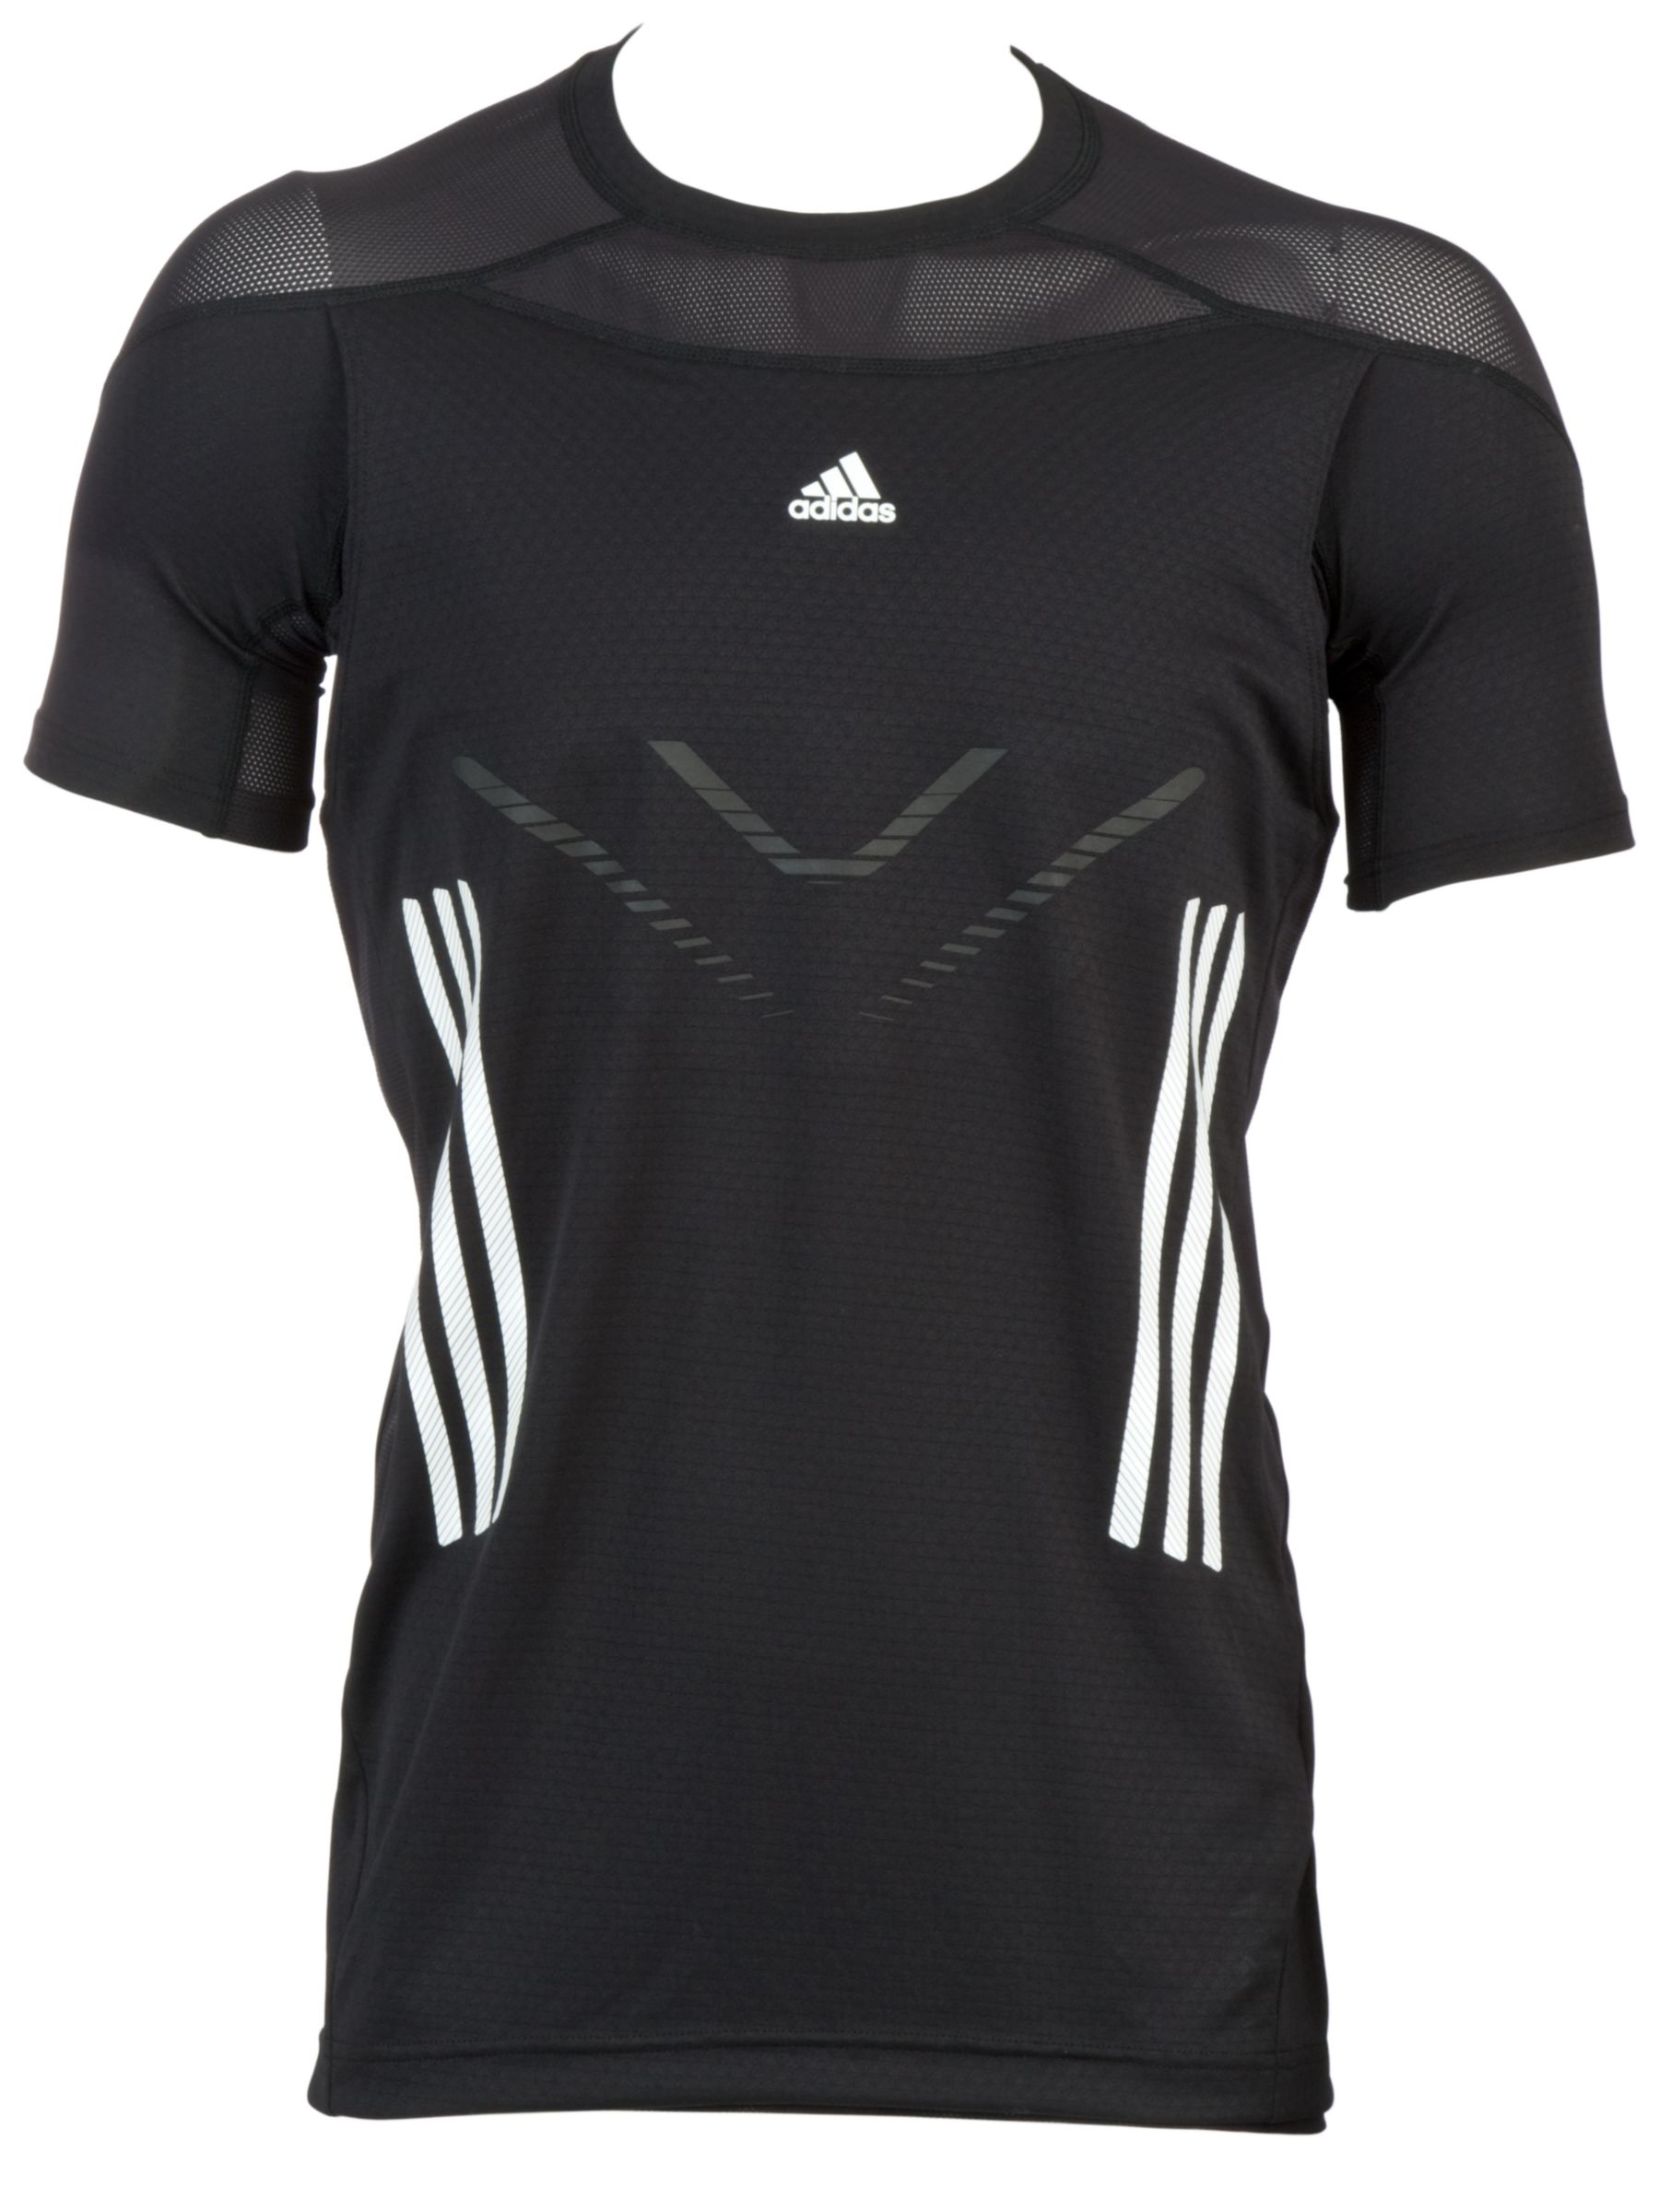 Adidas ClimaPace Pulse T-Shirt, Black